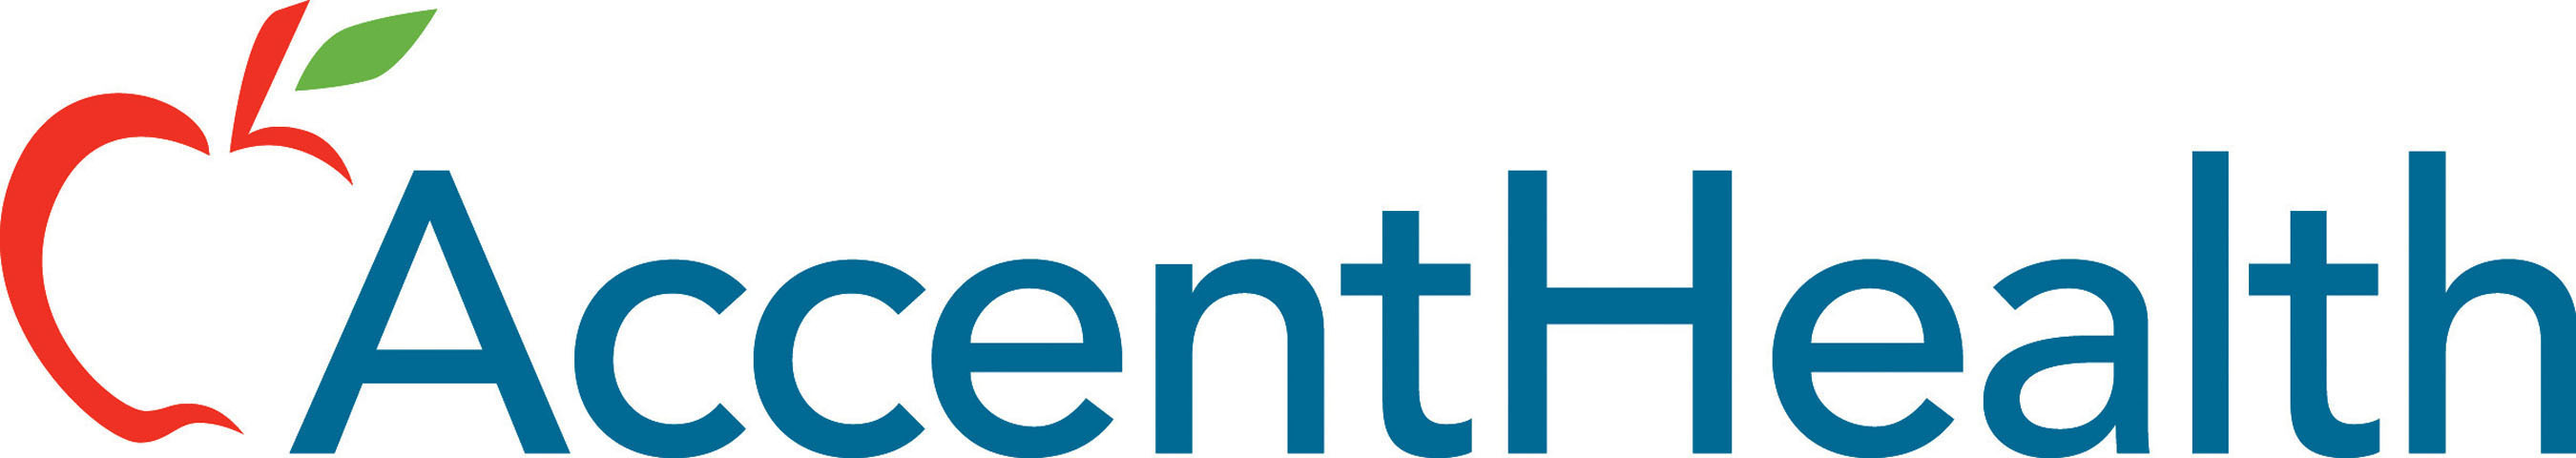 AccentHealth logo